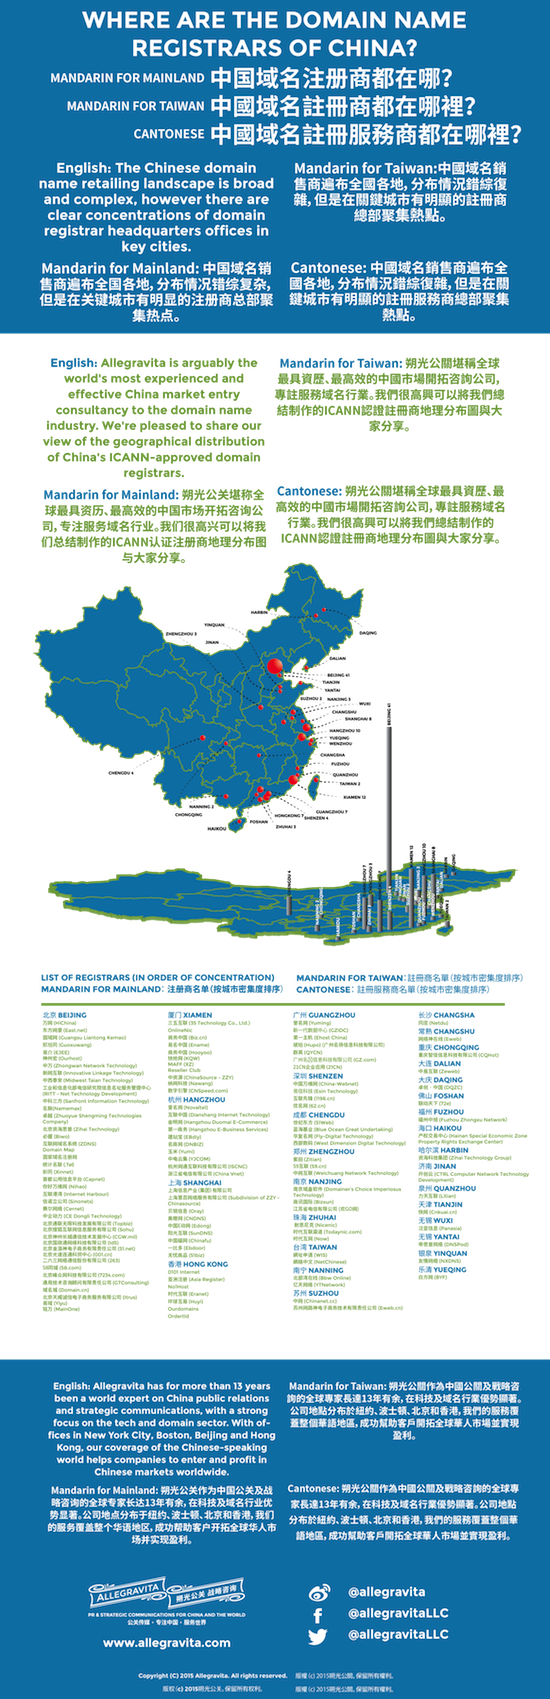 China registrars - small